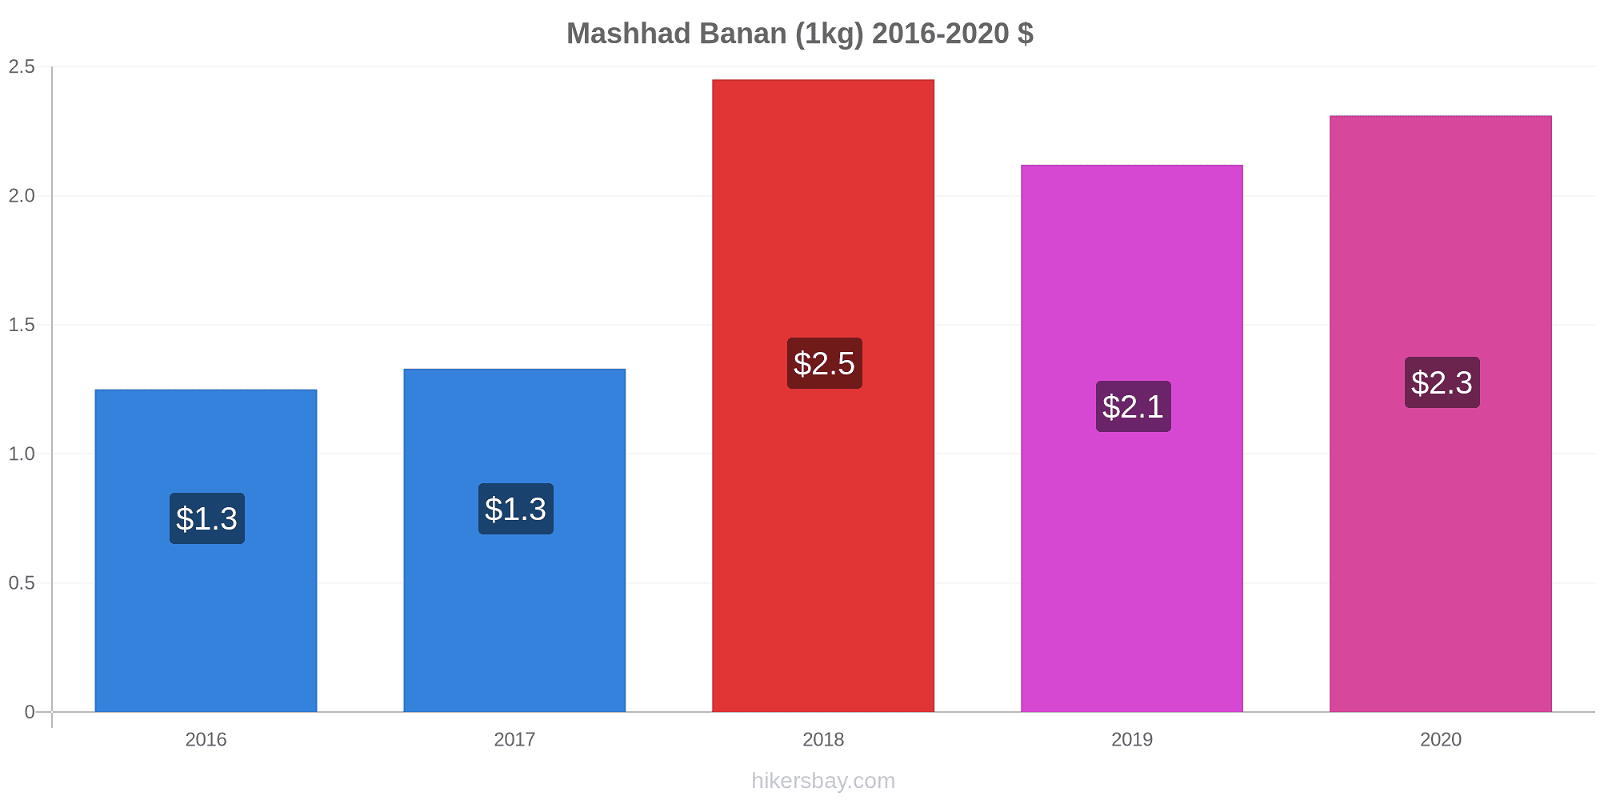 Mashhad prisændringer Banan (1kg) hikersbay.com